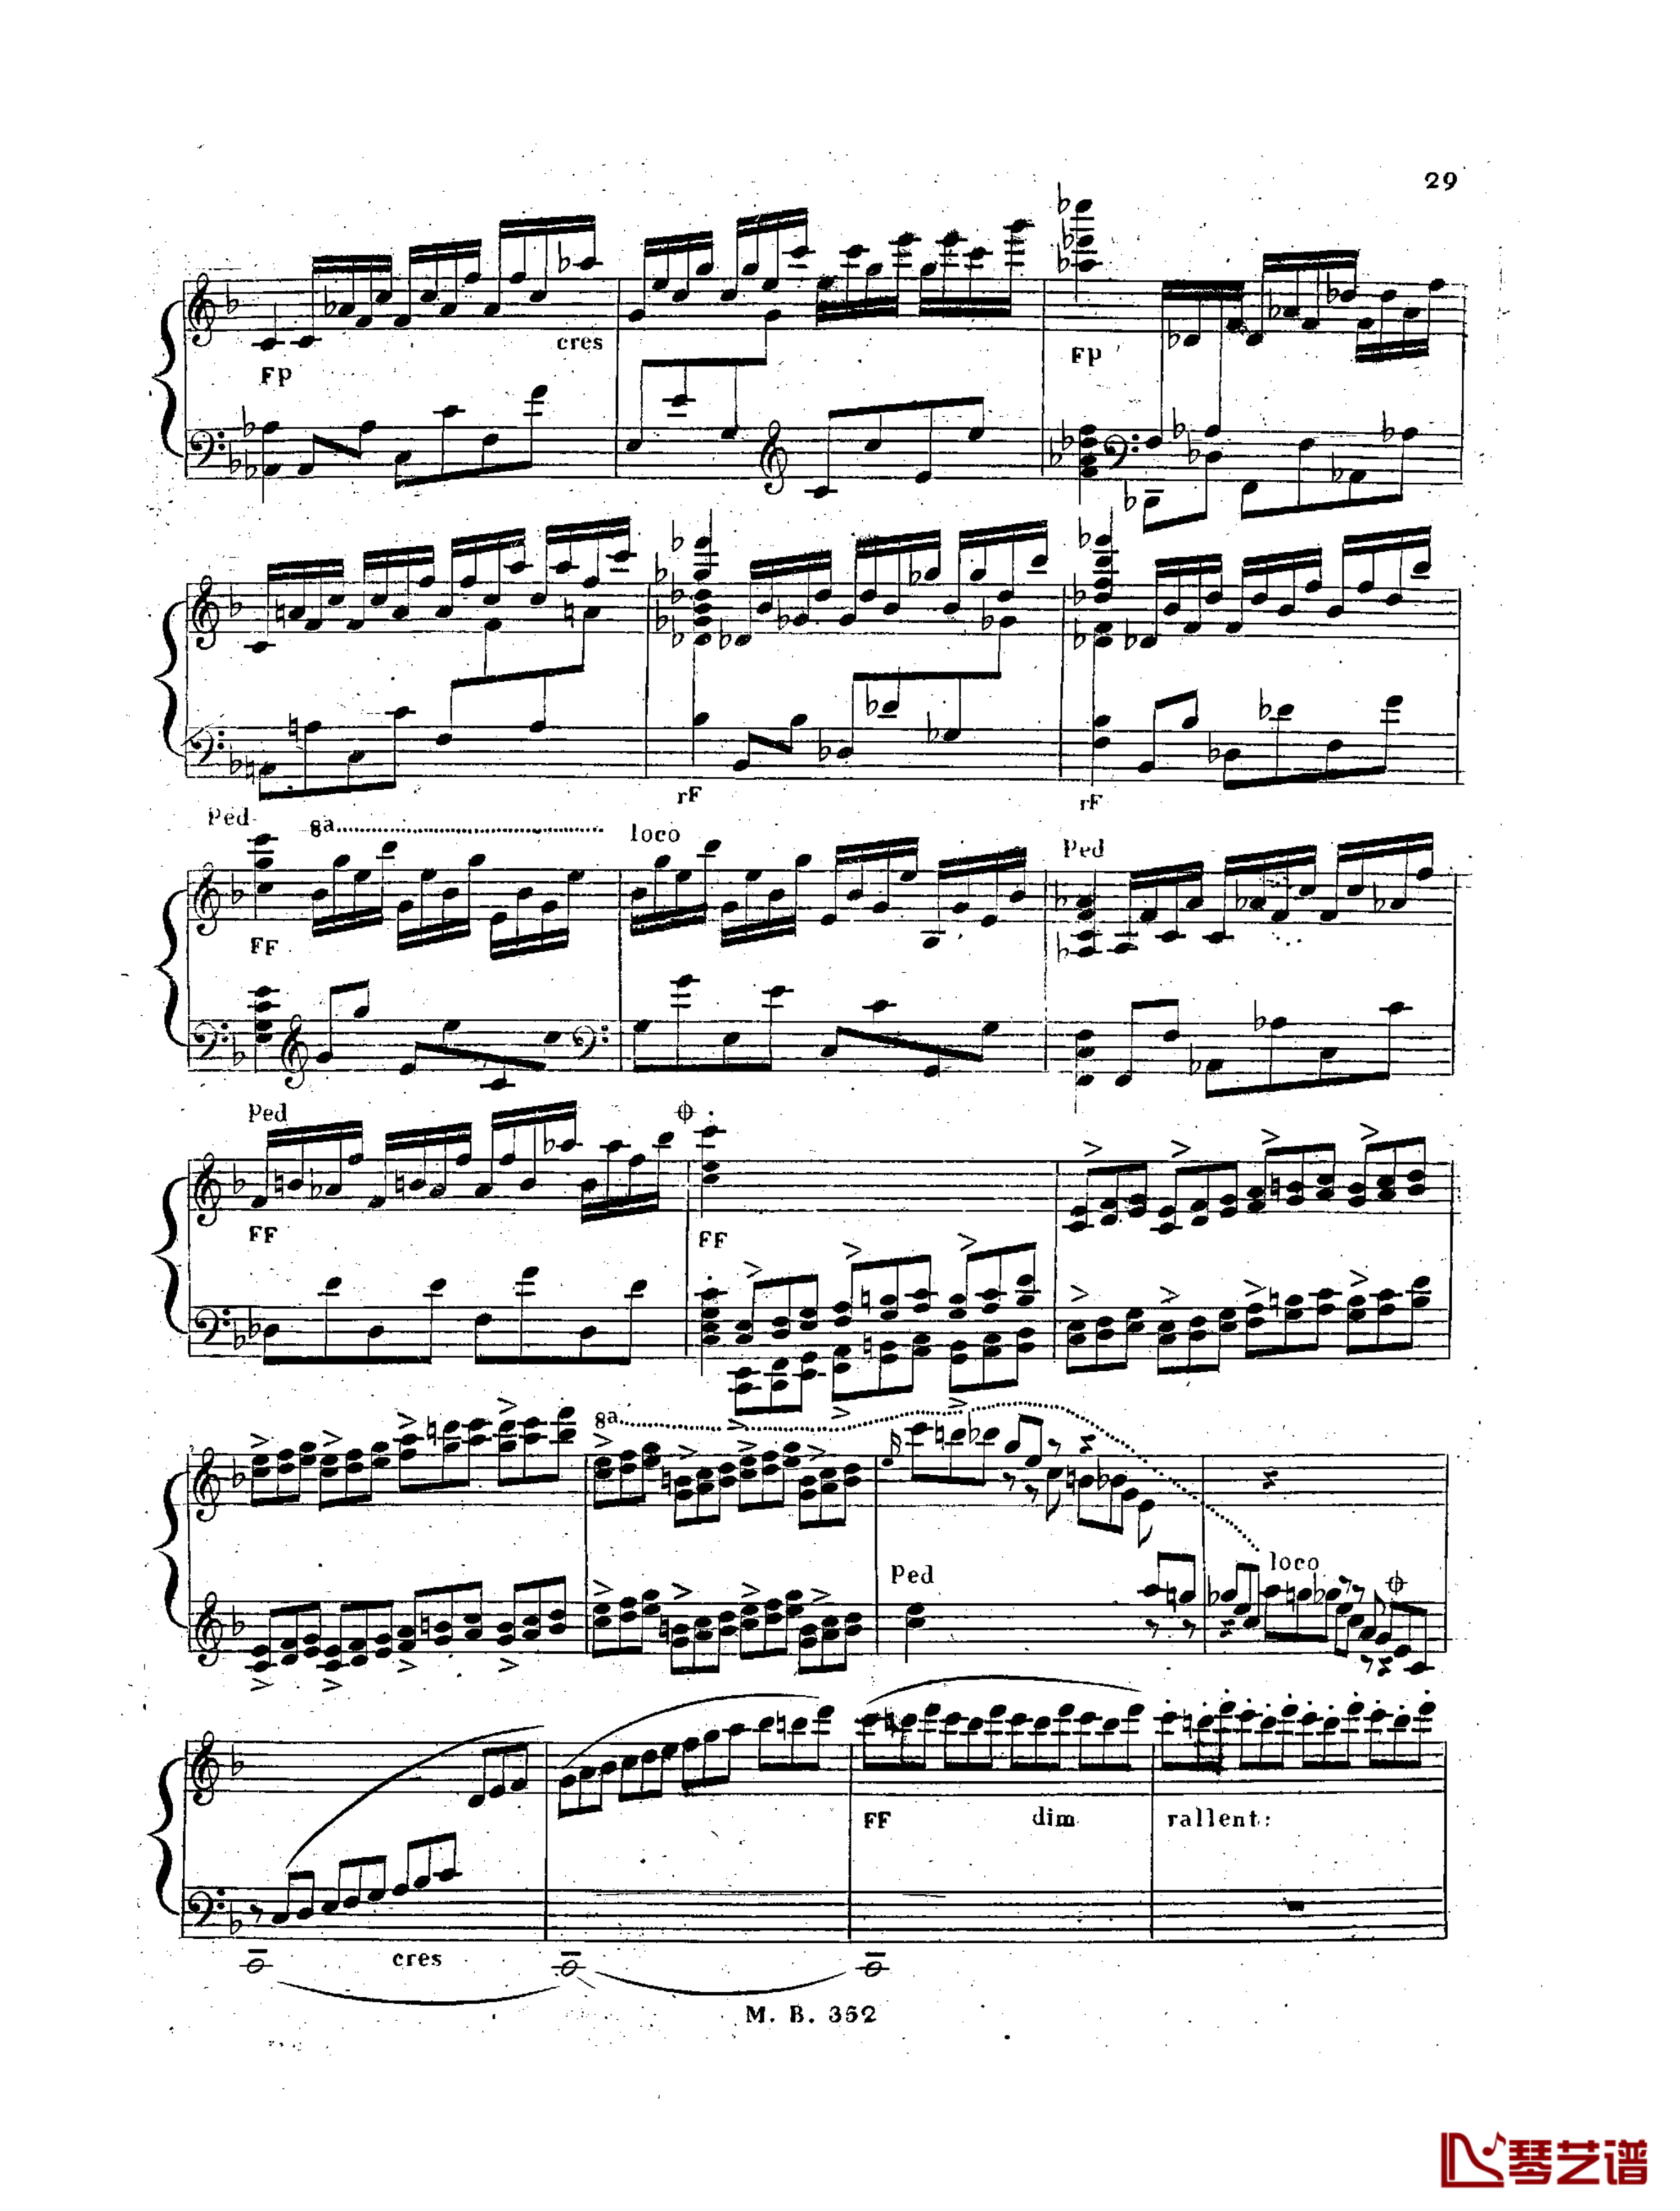  d小调第一钢琴协奏曲 Op.61  第三乐章钢琴谱-卡尔克布雷纳5